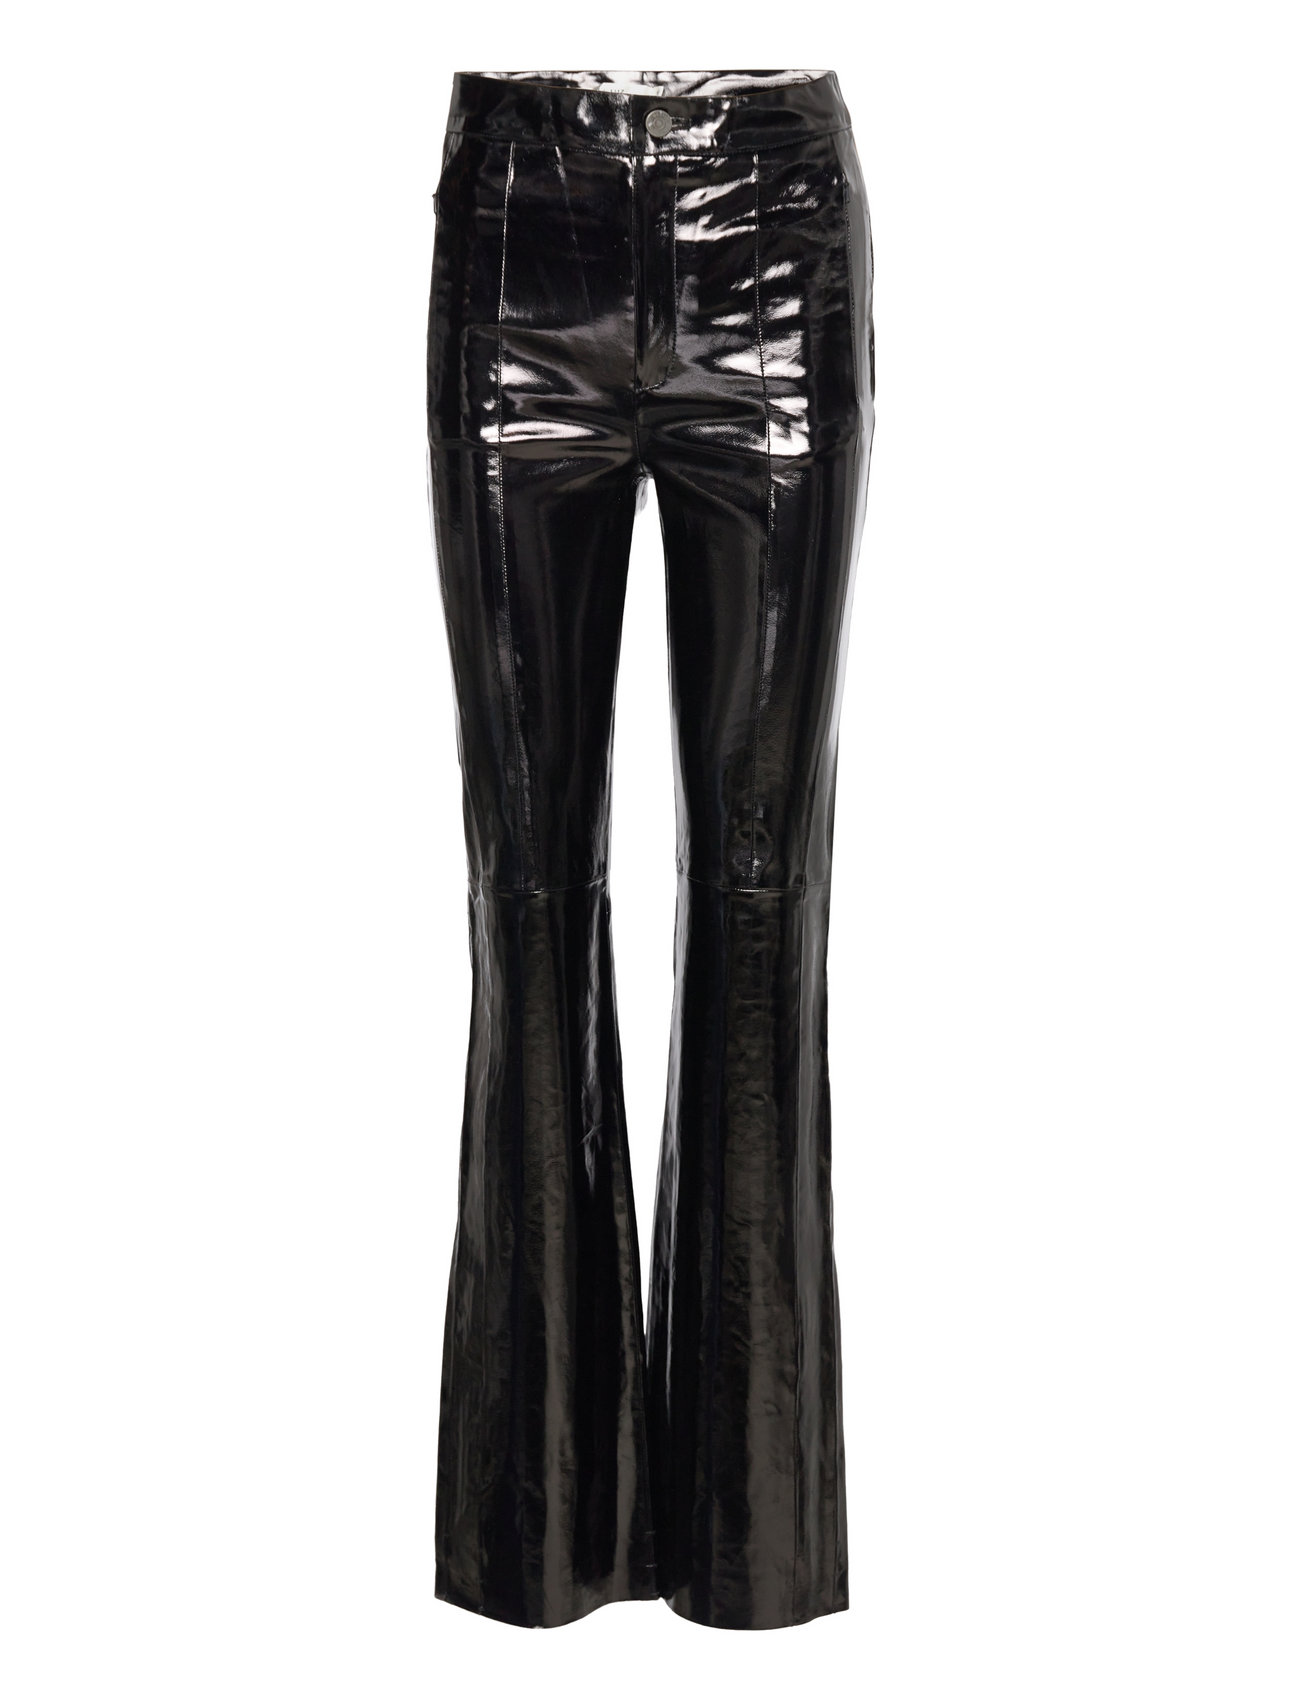 Gestuz Gochagz Hw Pants (Black), 3149.30 kr | Stort mærker Booztlet.com